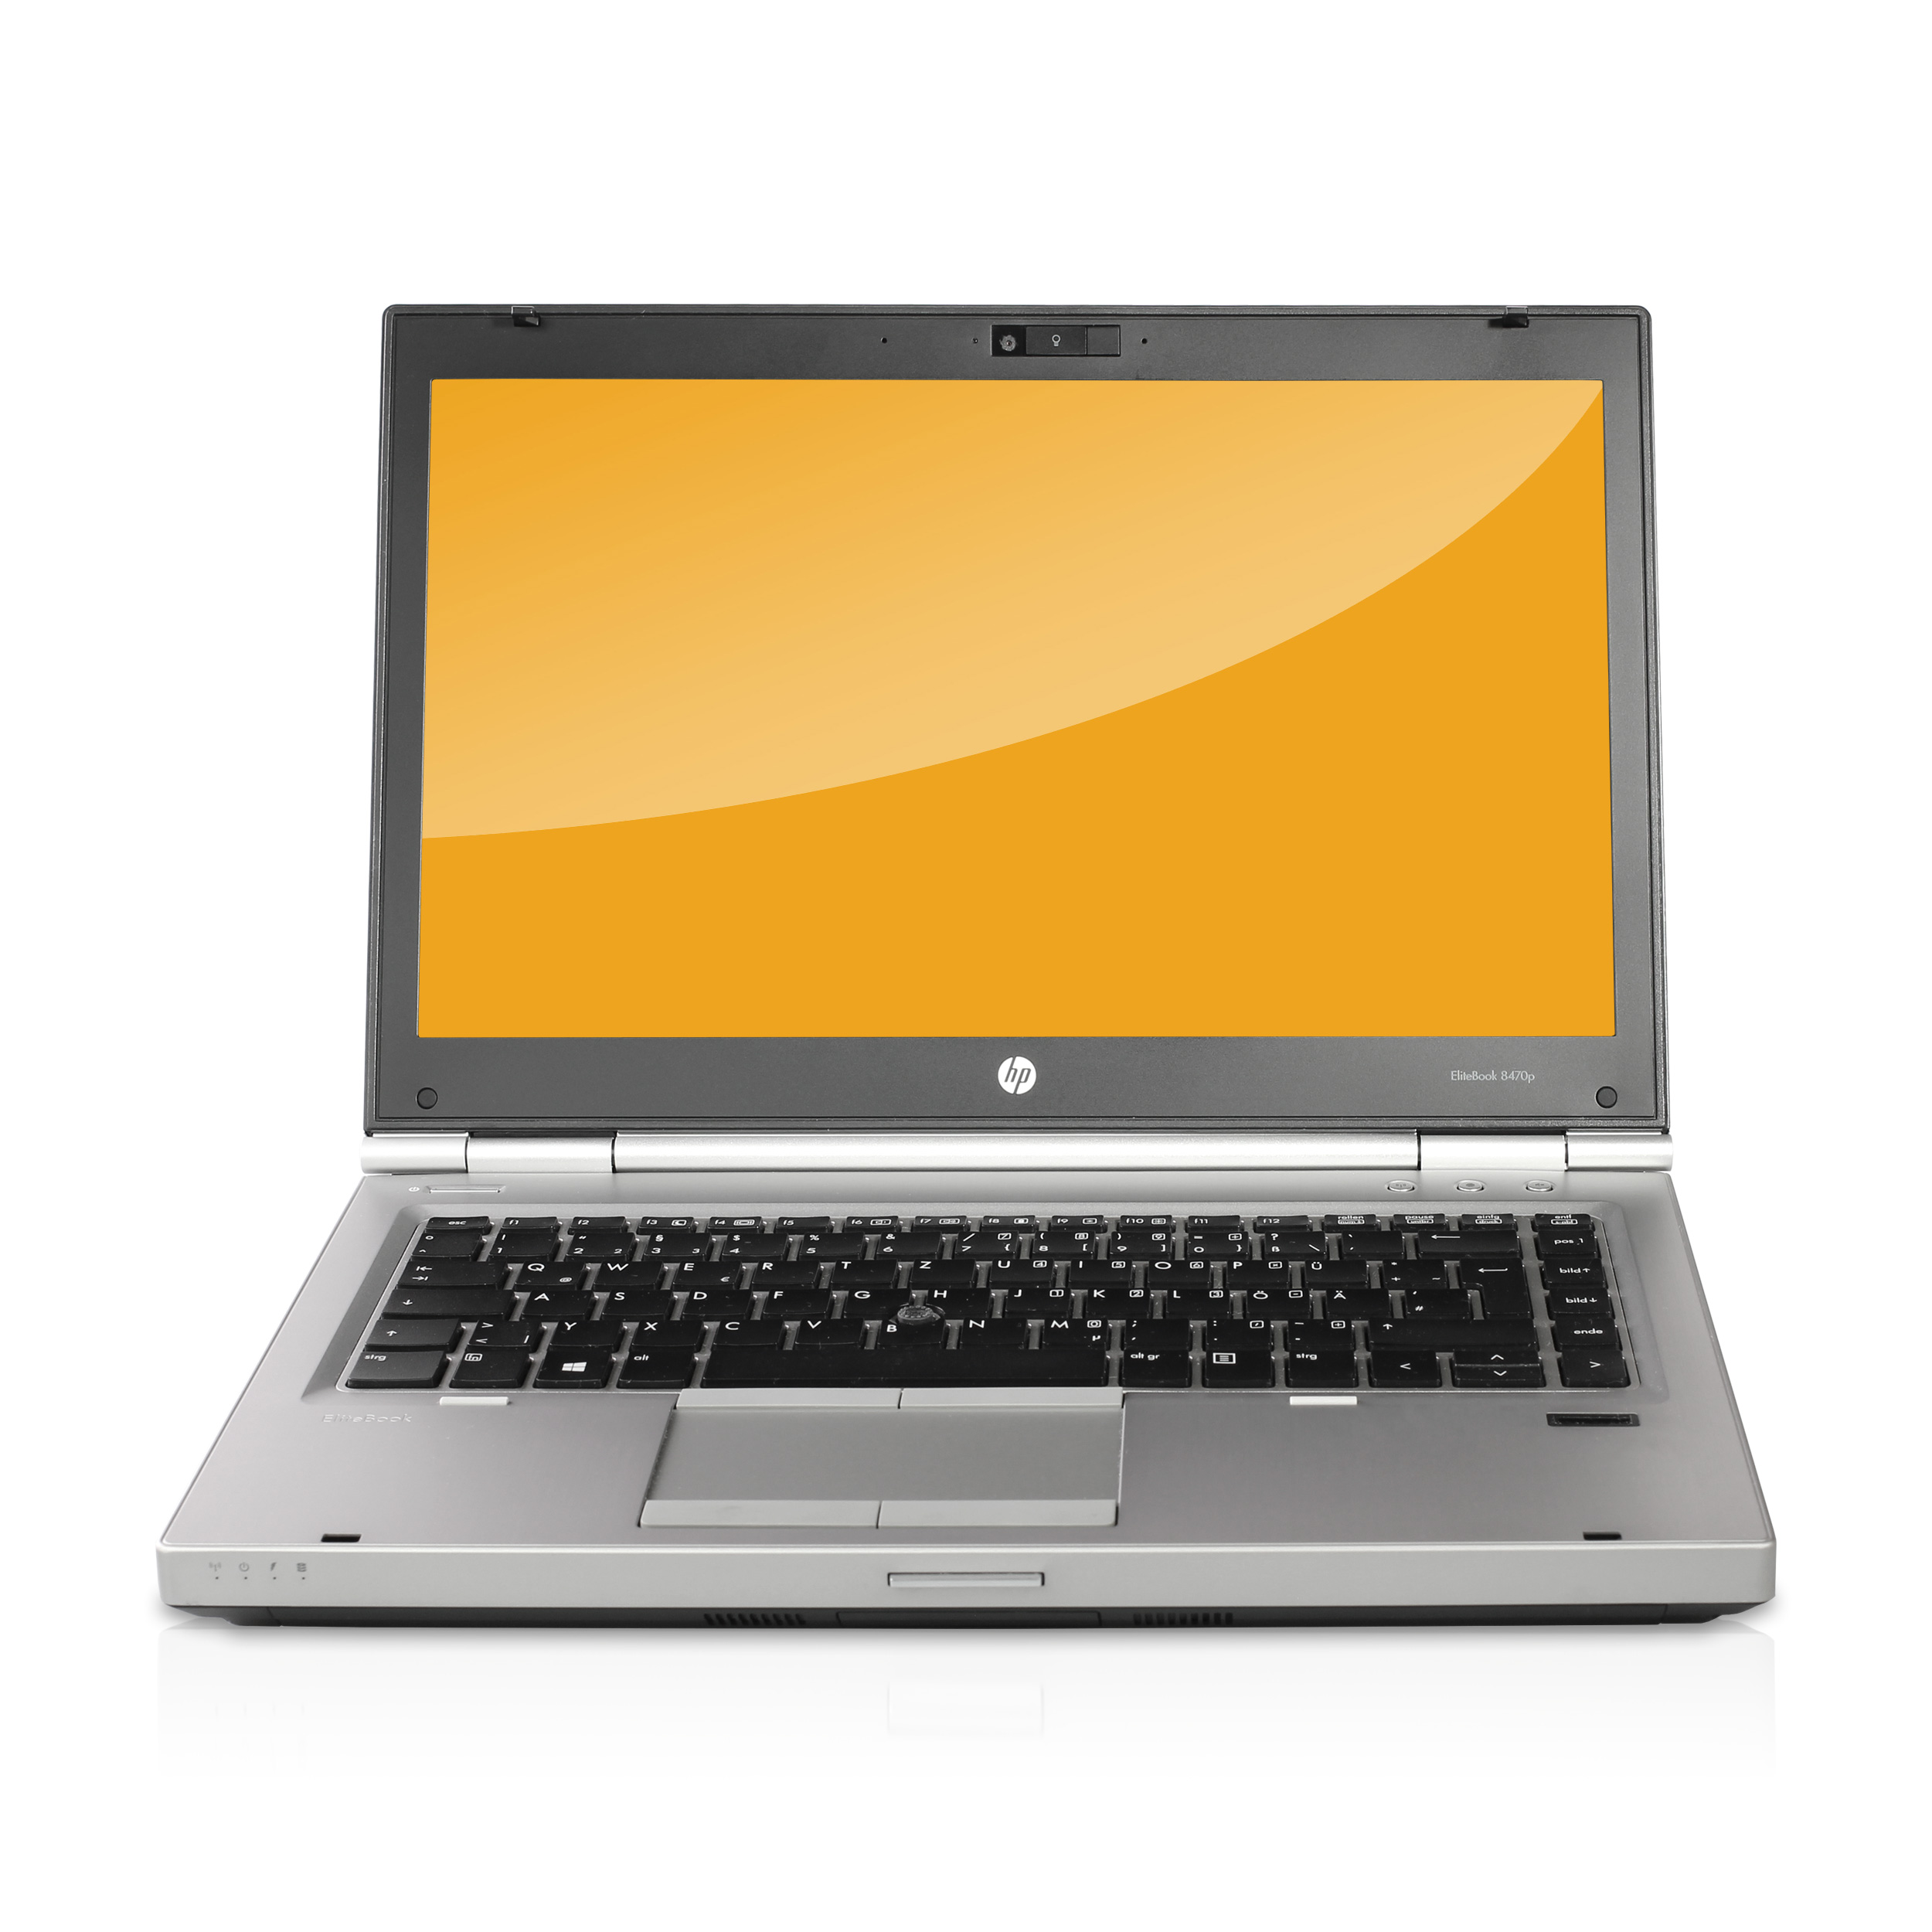 Hewlett-Packard - HP EliteBook 8470p